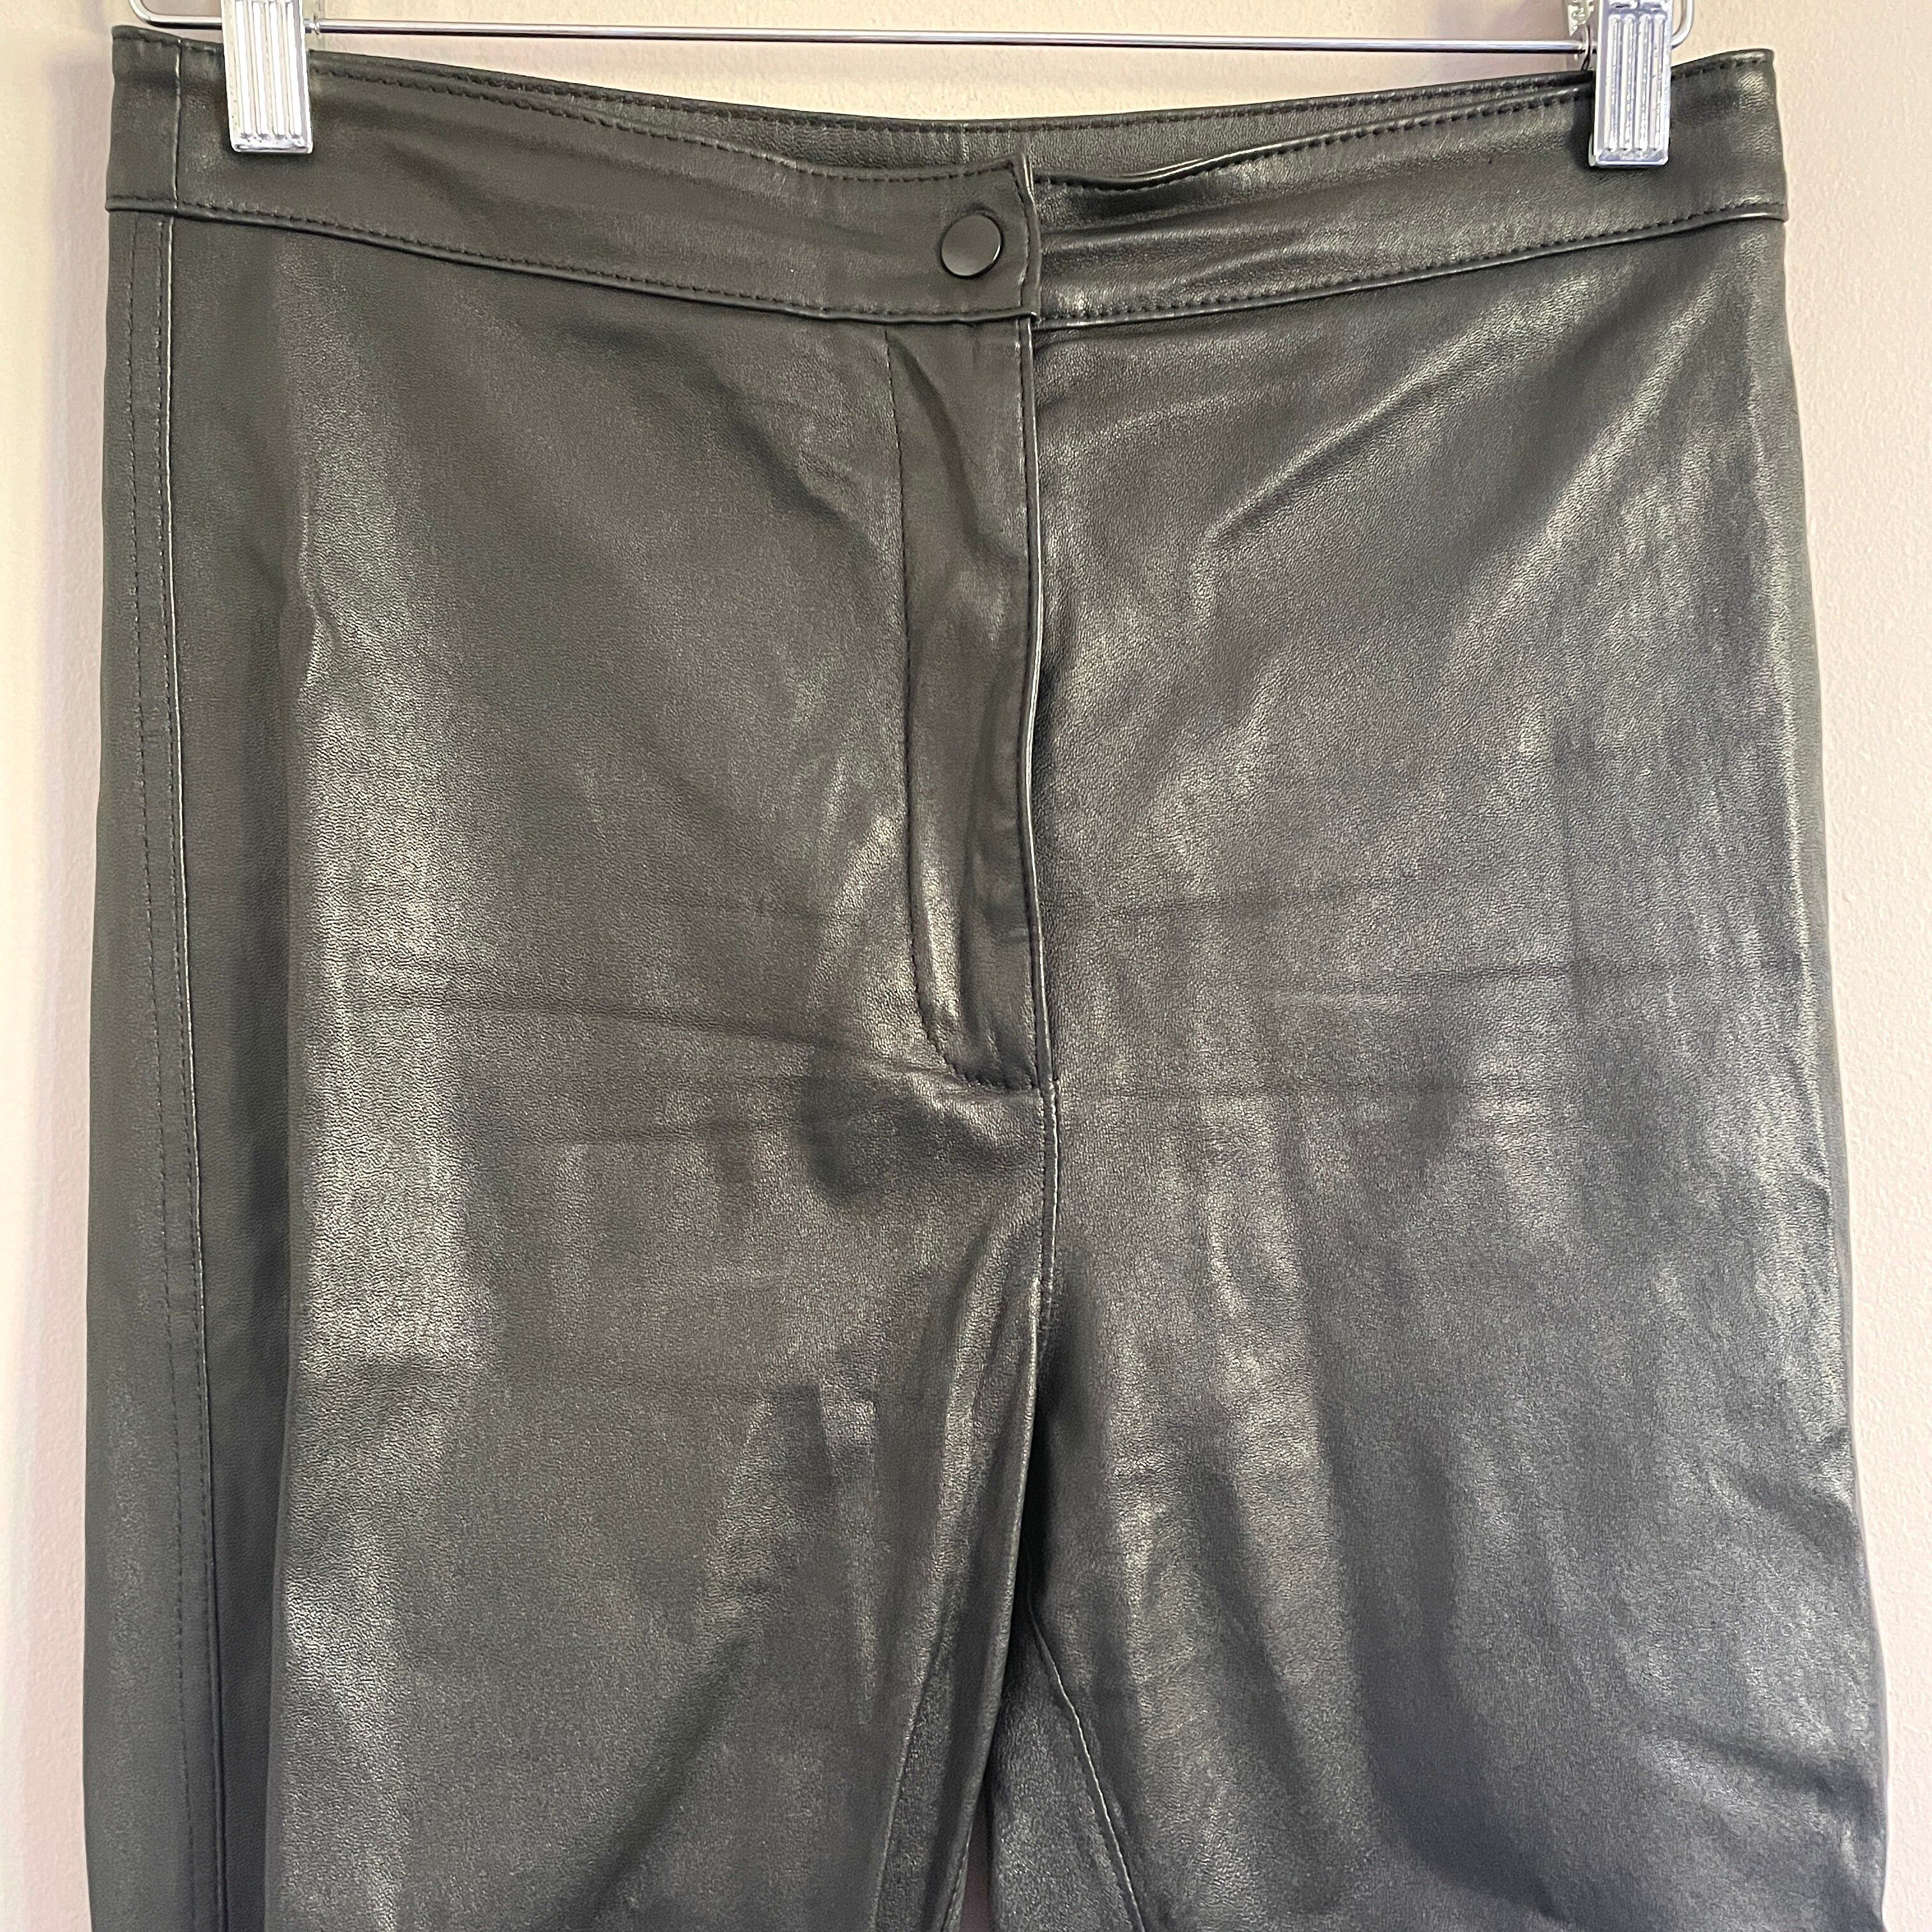 T by Alexander Wang Alexander Wang Black Stretch Leather Ruching Skinny Pants Size 28" / US 6 / IT 42 - 3 Thumbnail